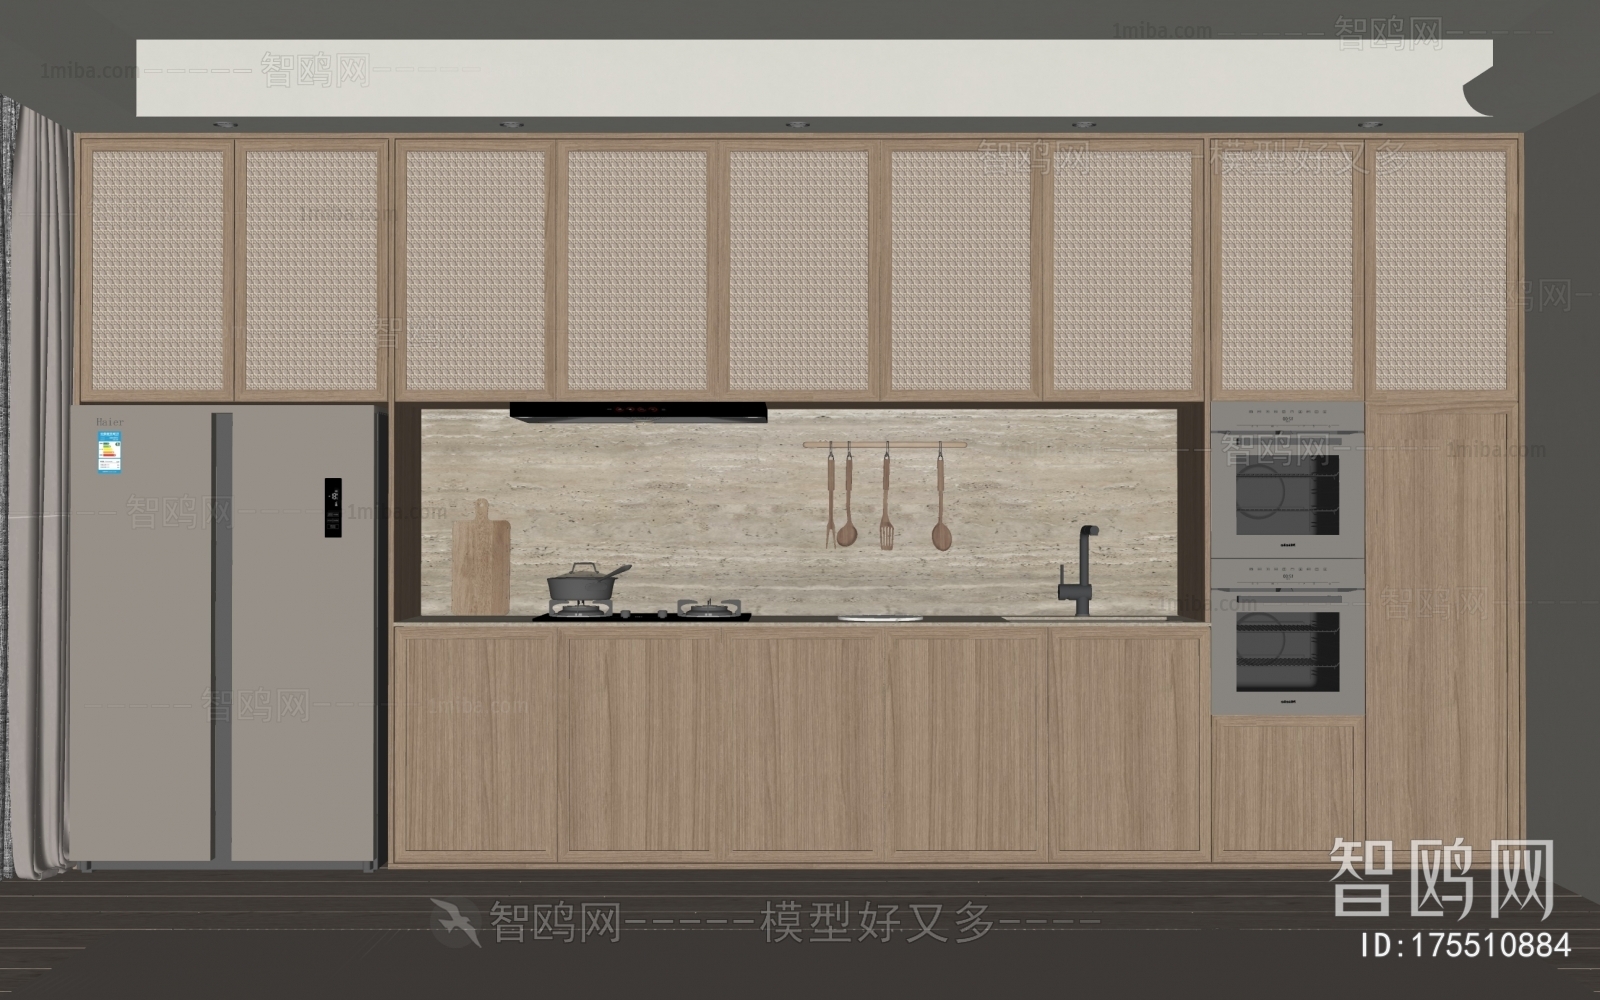 Wabi-sabi Style Kitchen Cabinet